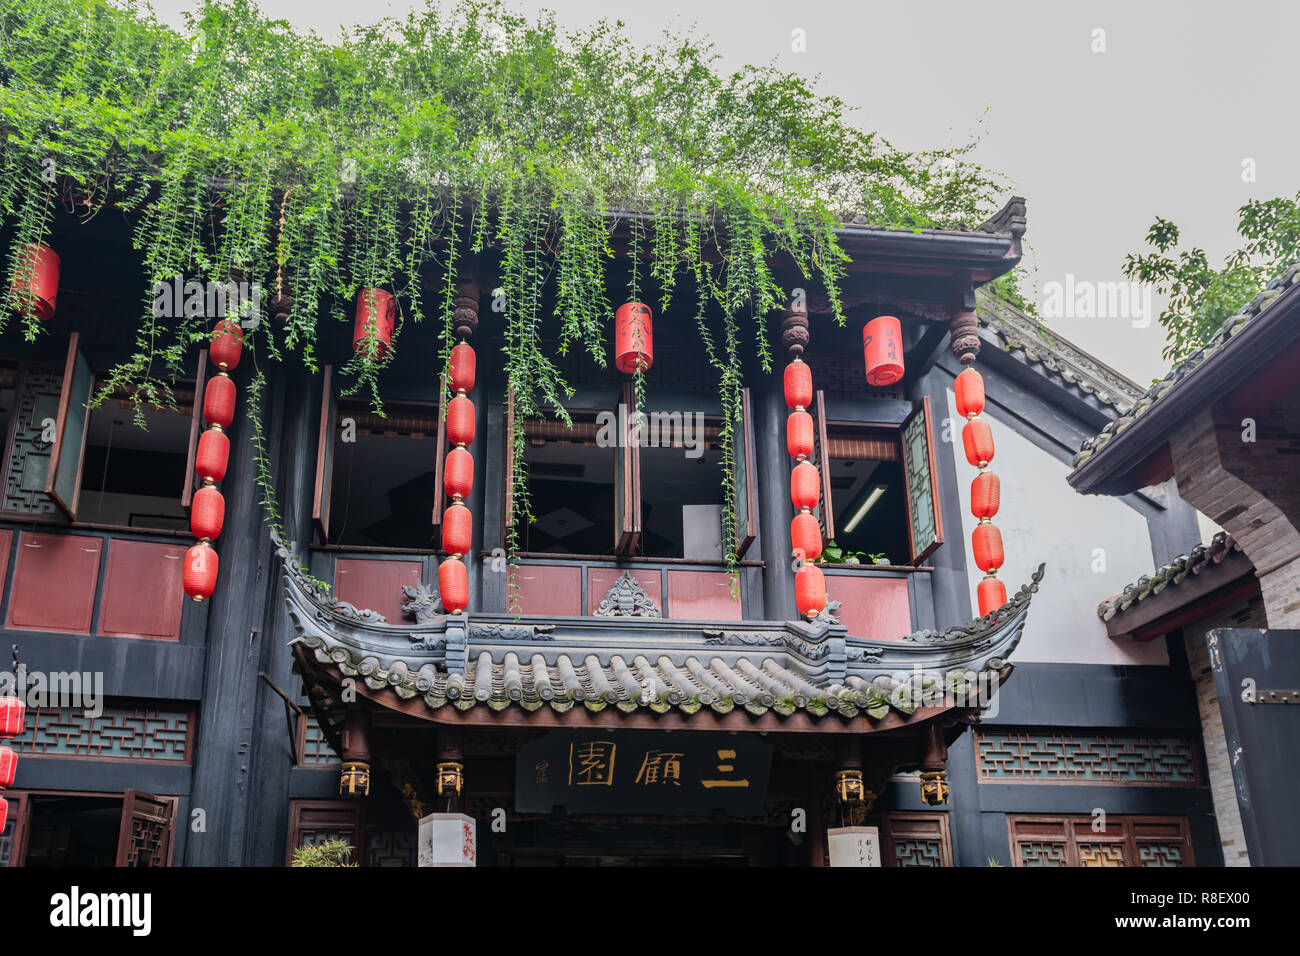 Red lantern decorating building in Old Jinli Street, Chengdu, China Stock Photo